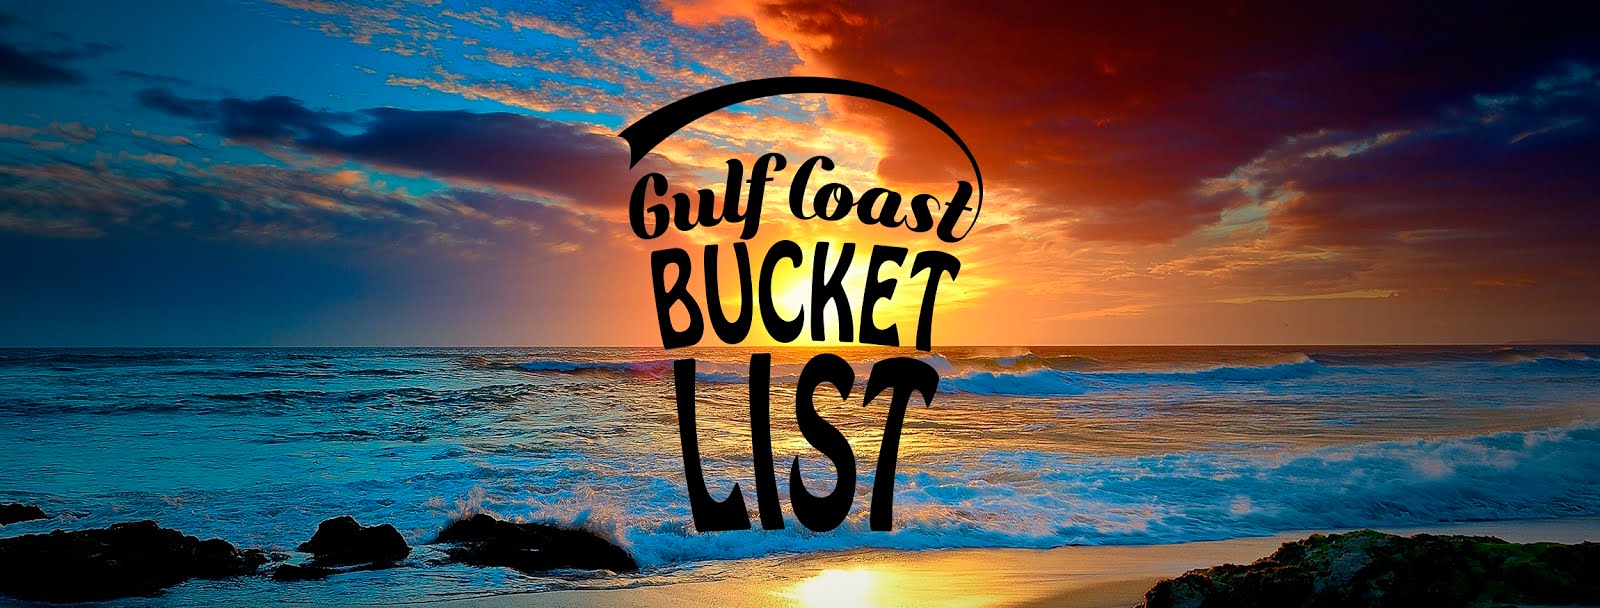 Gulf Coast Bucket List